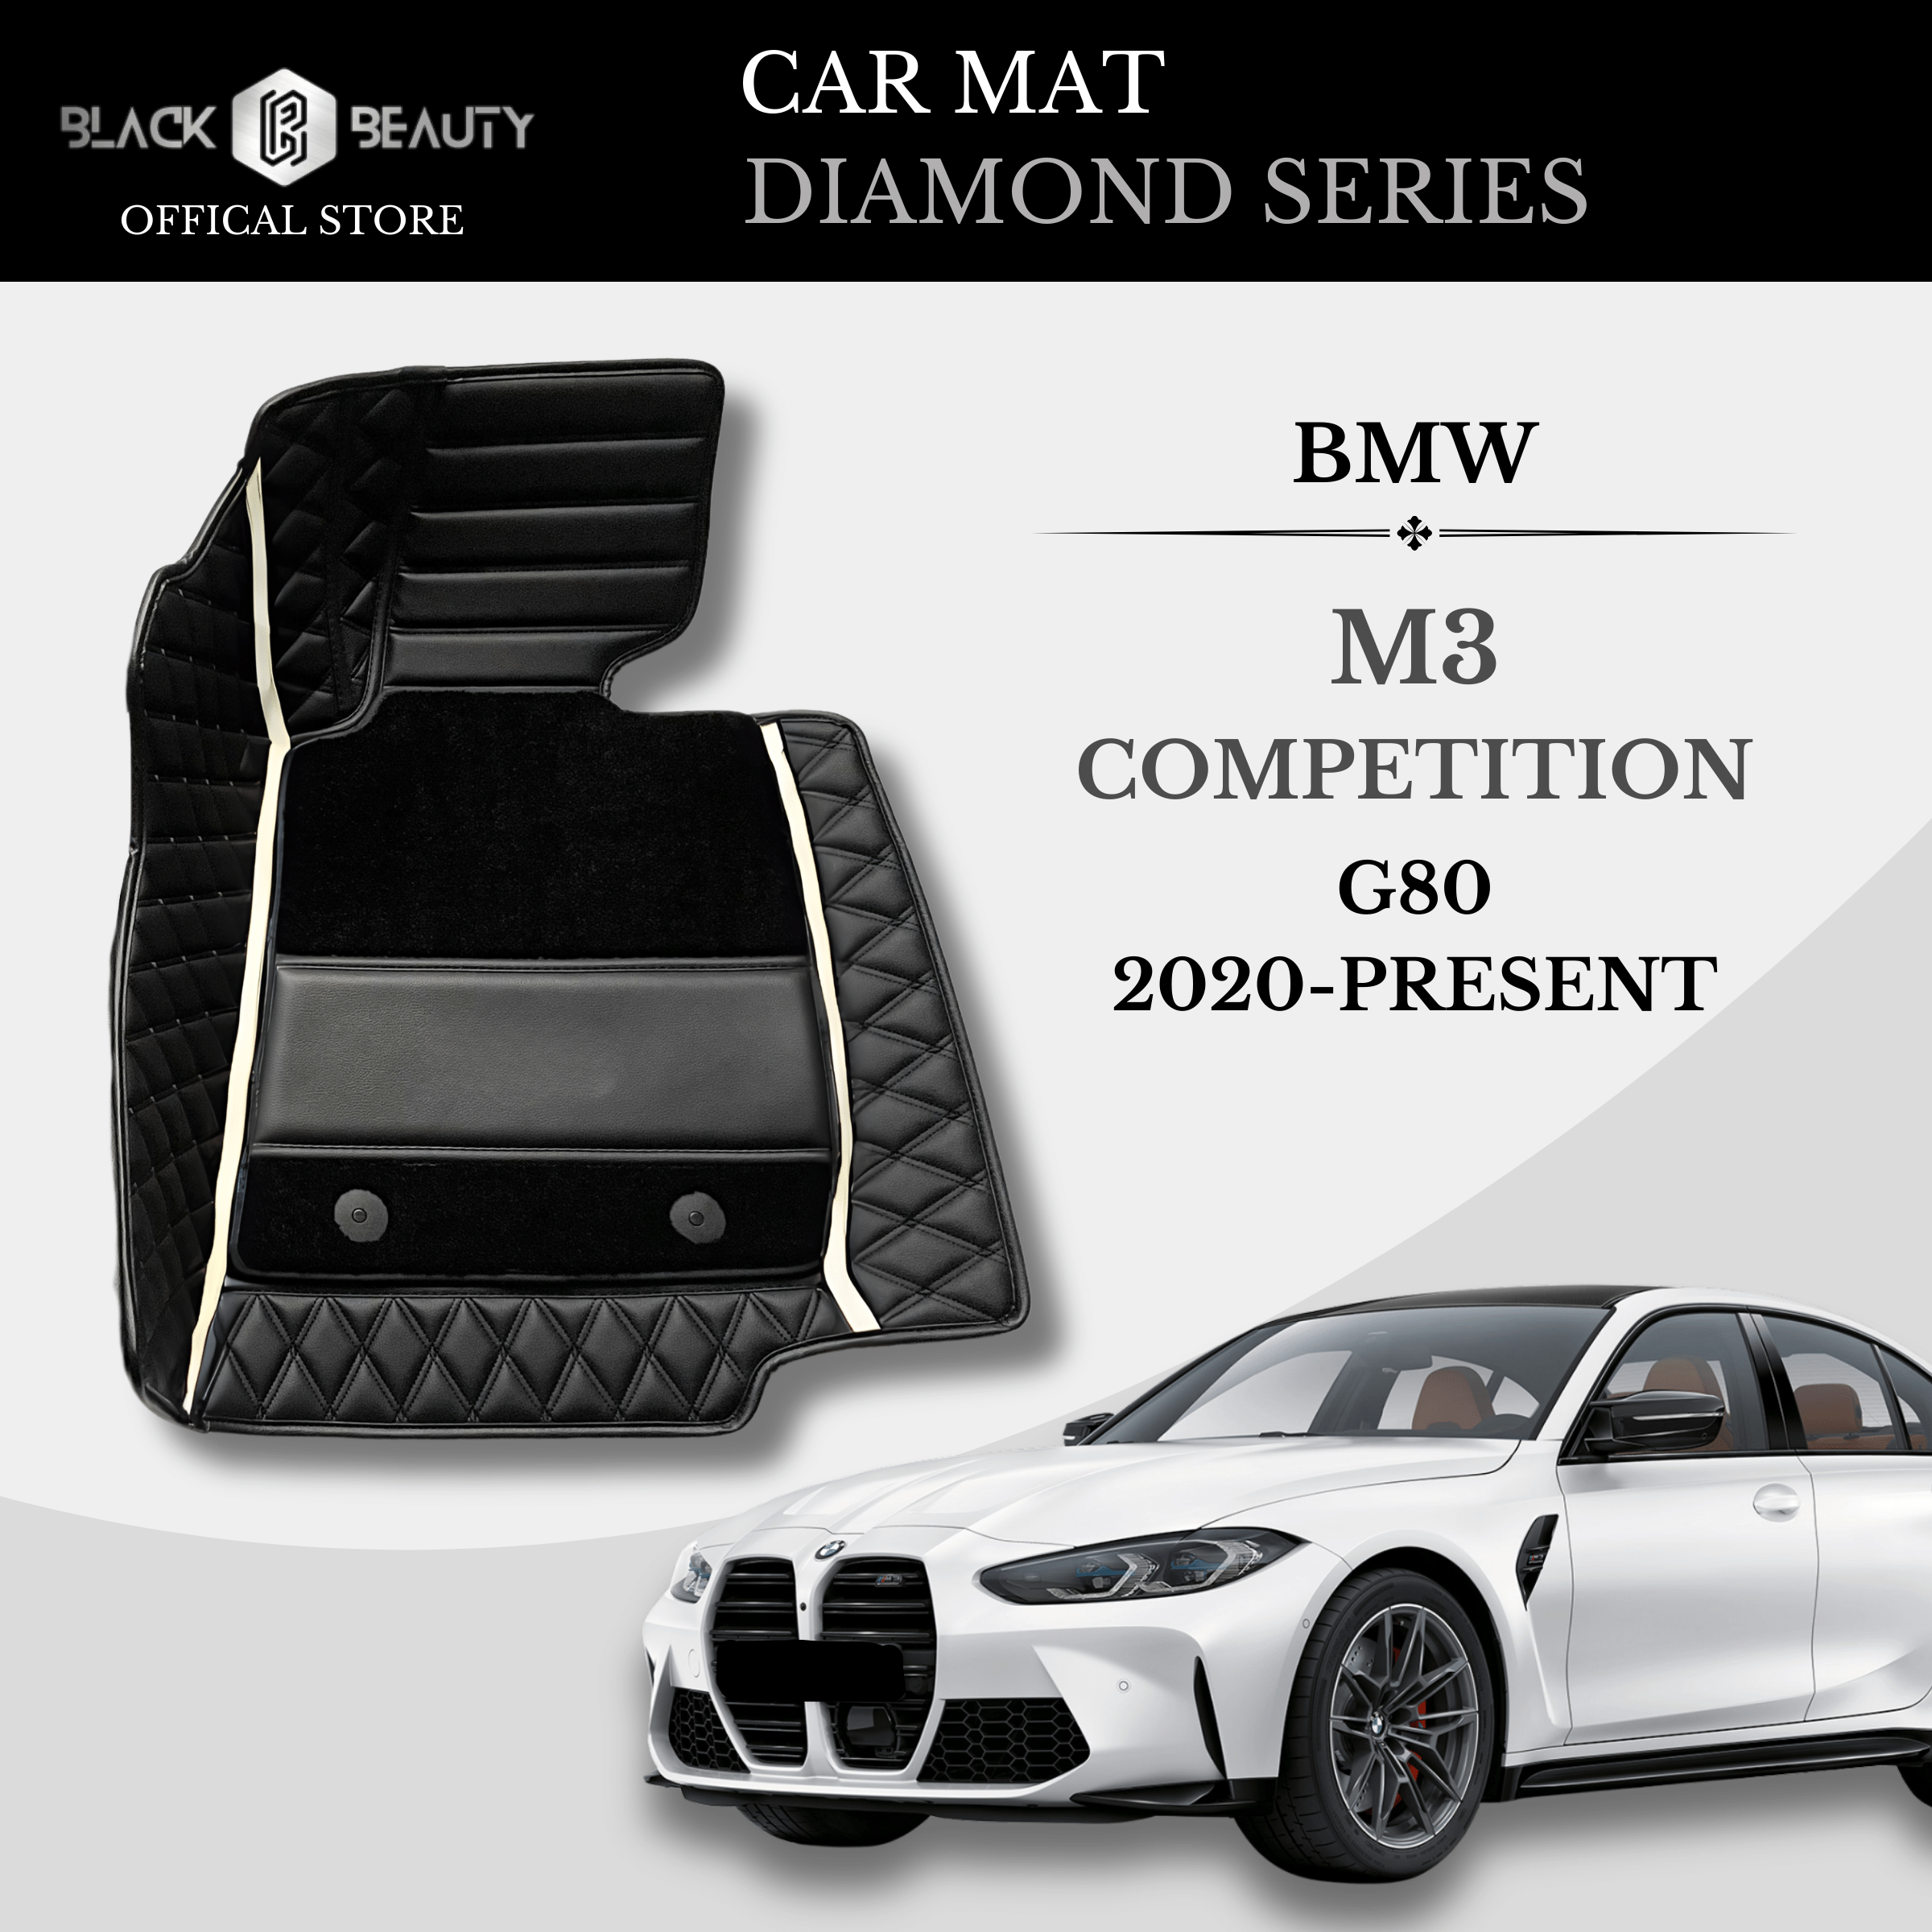 BMW M3 Competition G80 (2020-Present) - Diamond Series Car Mat